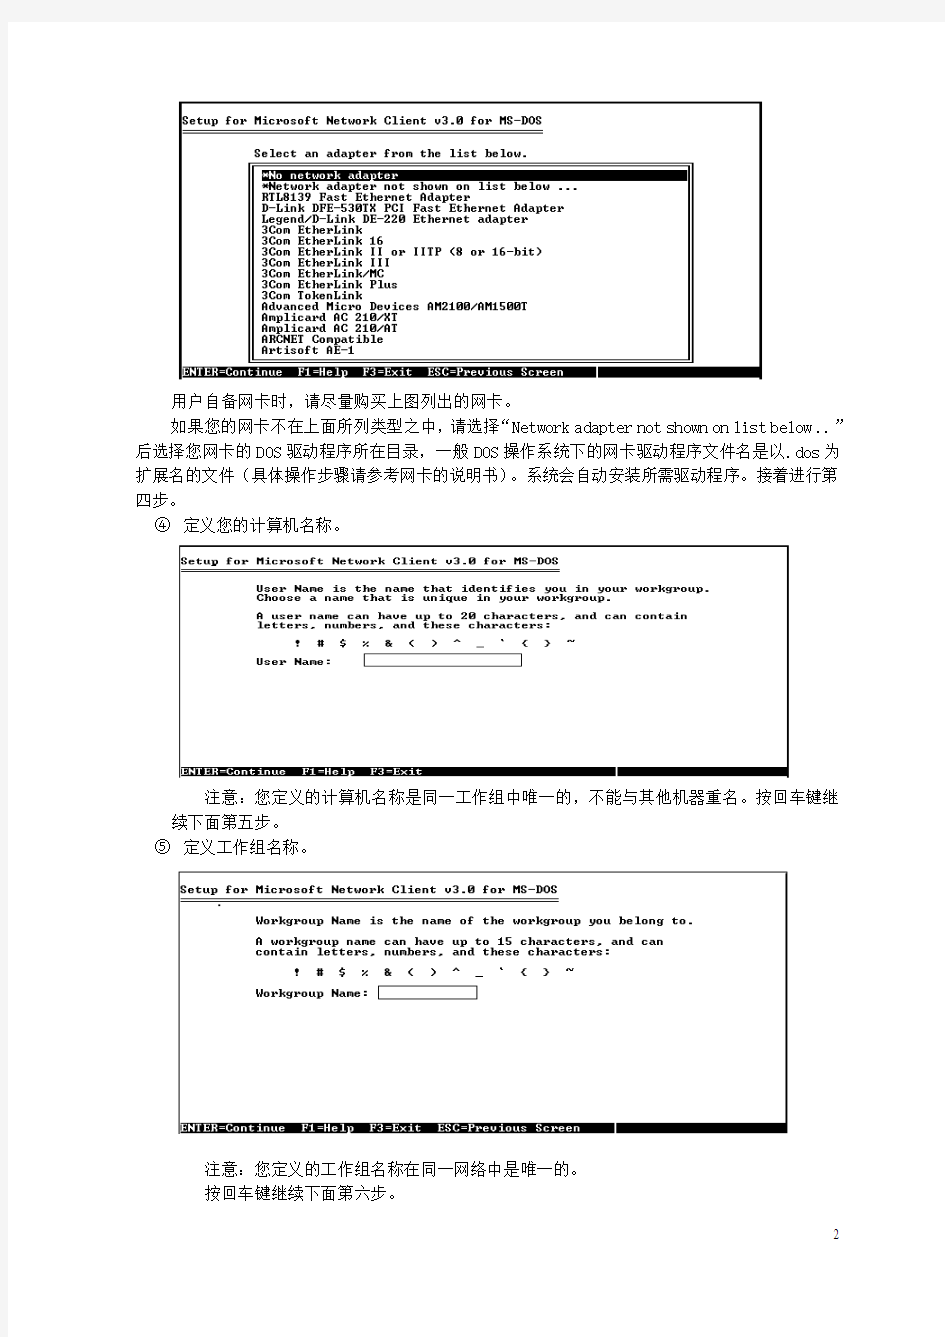 CNC机床联网操作手册(苏三光SKDA线切割DOS网卡)